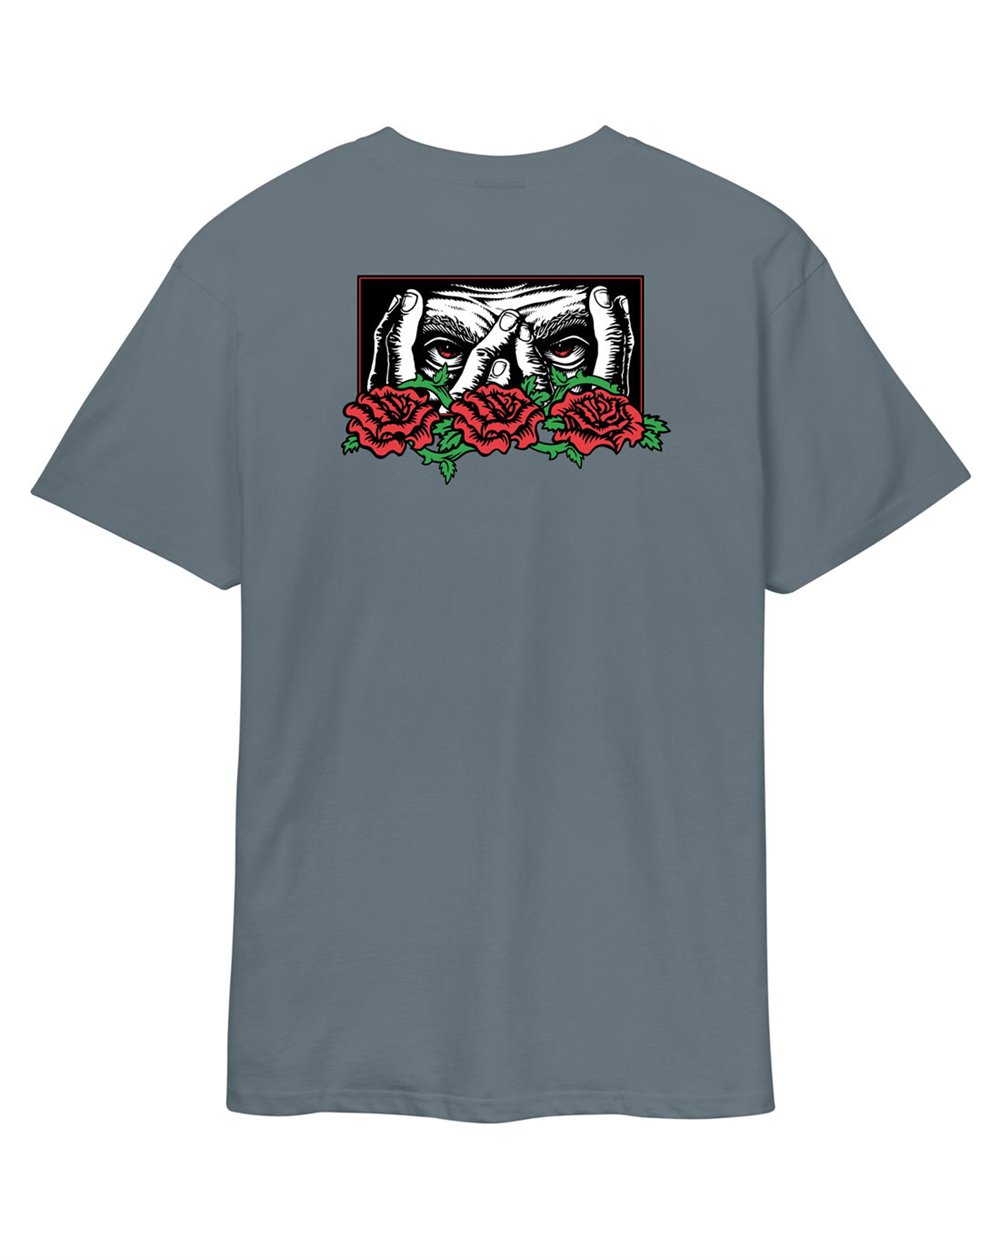 Santa Cruz T-Shirt Homme Dressen Roses Ever-Slick (Iron)